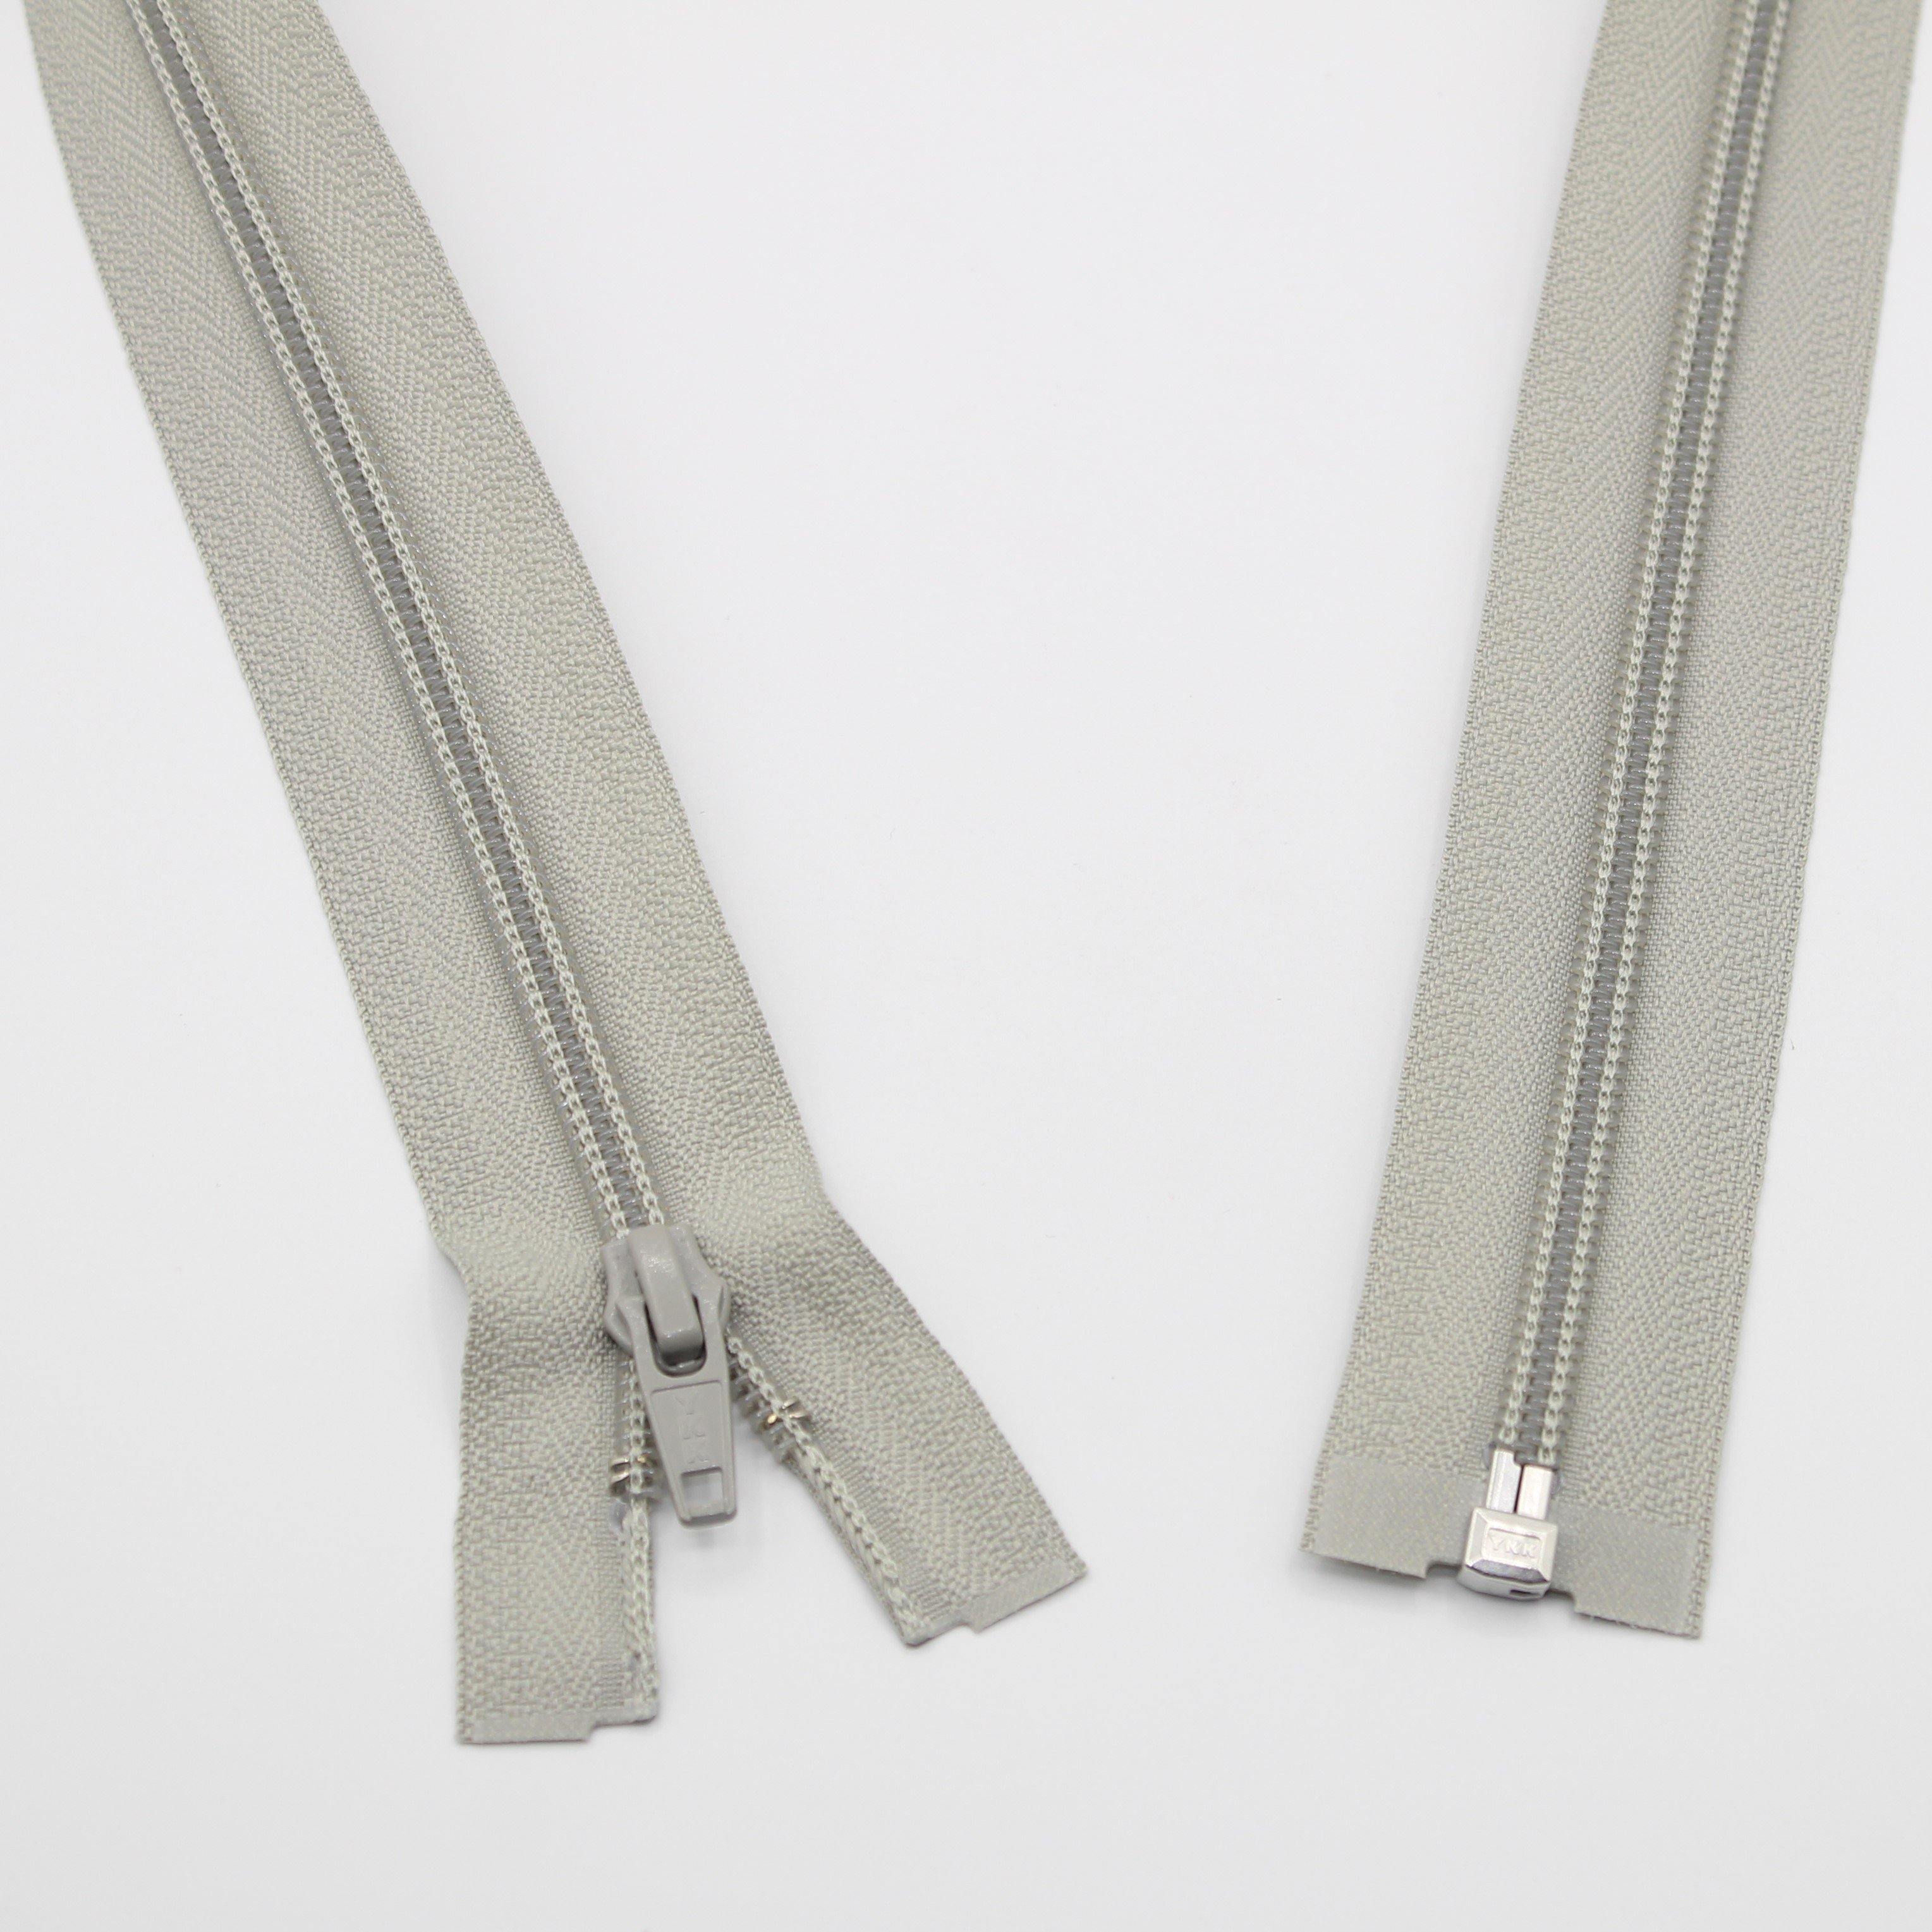 YKK - 80cm Nylon Zipper for Jackets - One Way Open end - ACCESSOIRES LEDUC